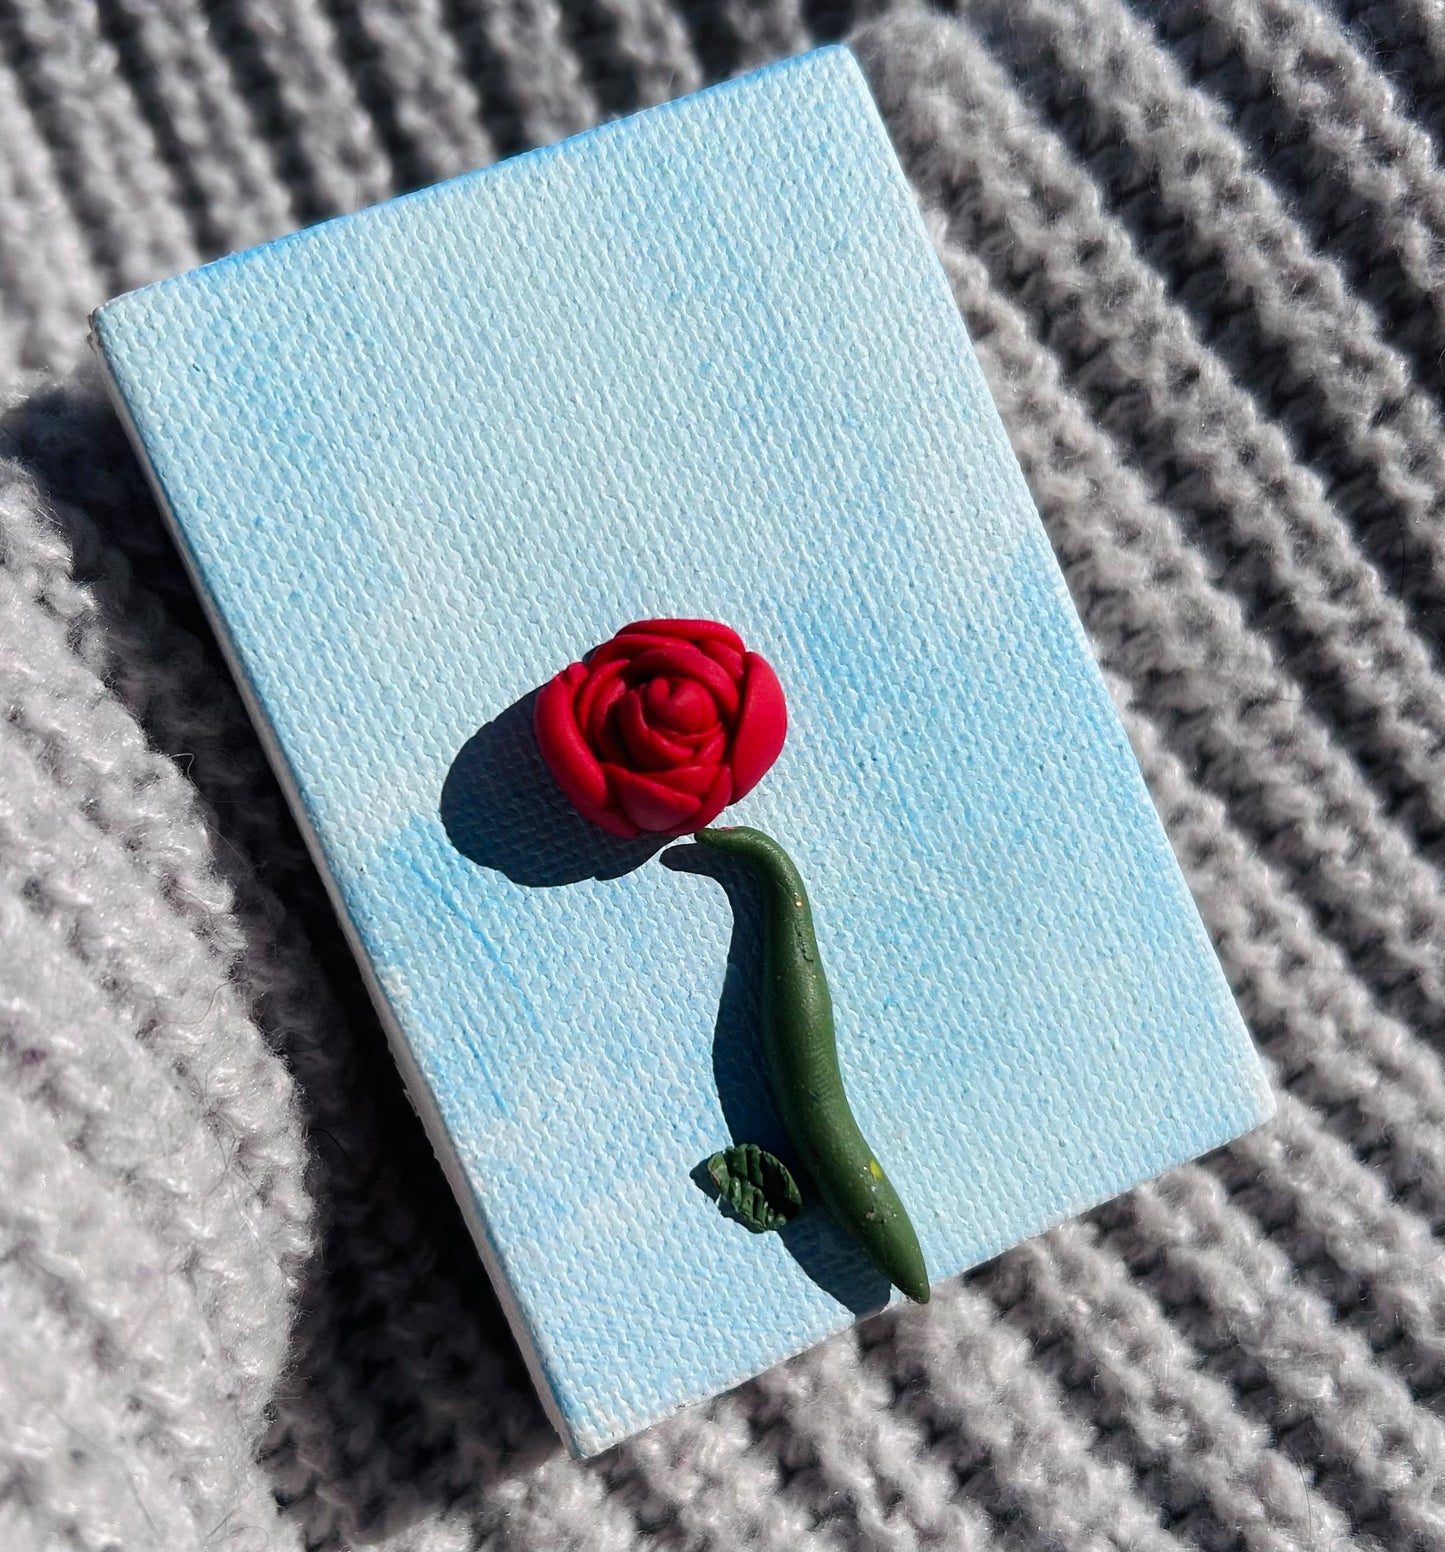 Hudson’s rose magnet